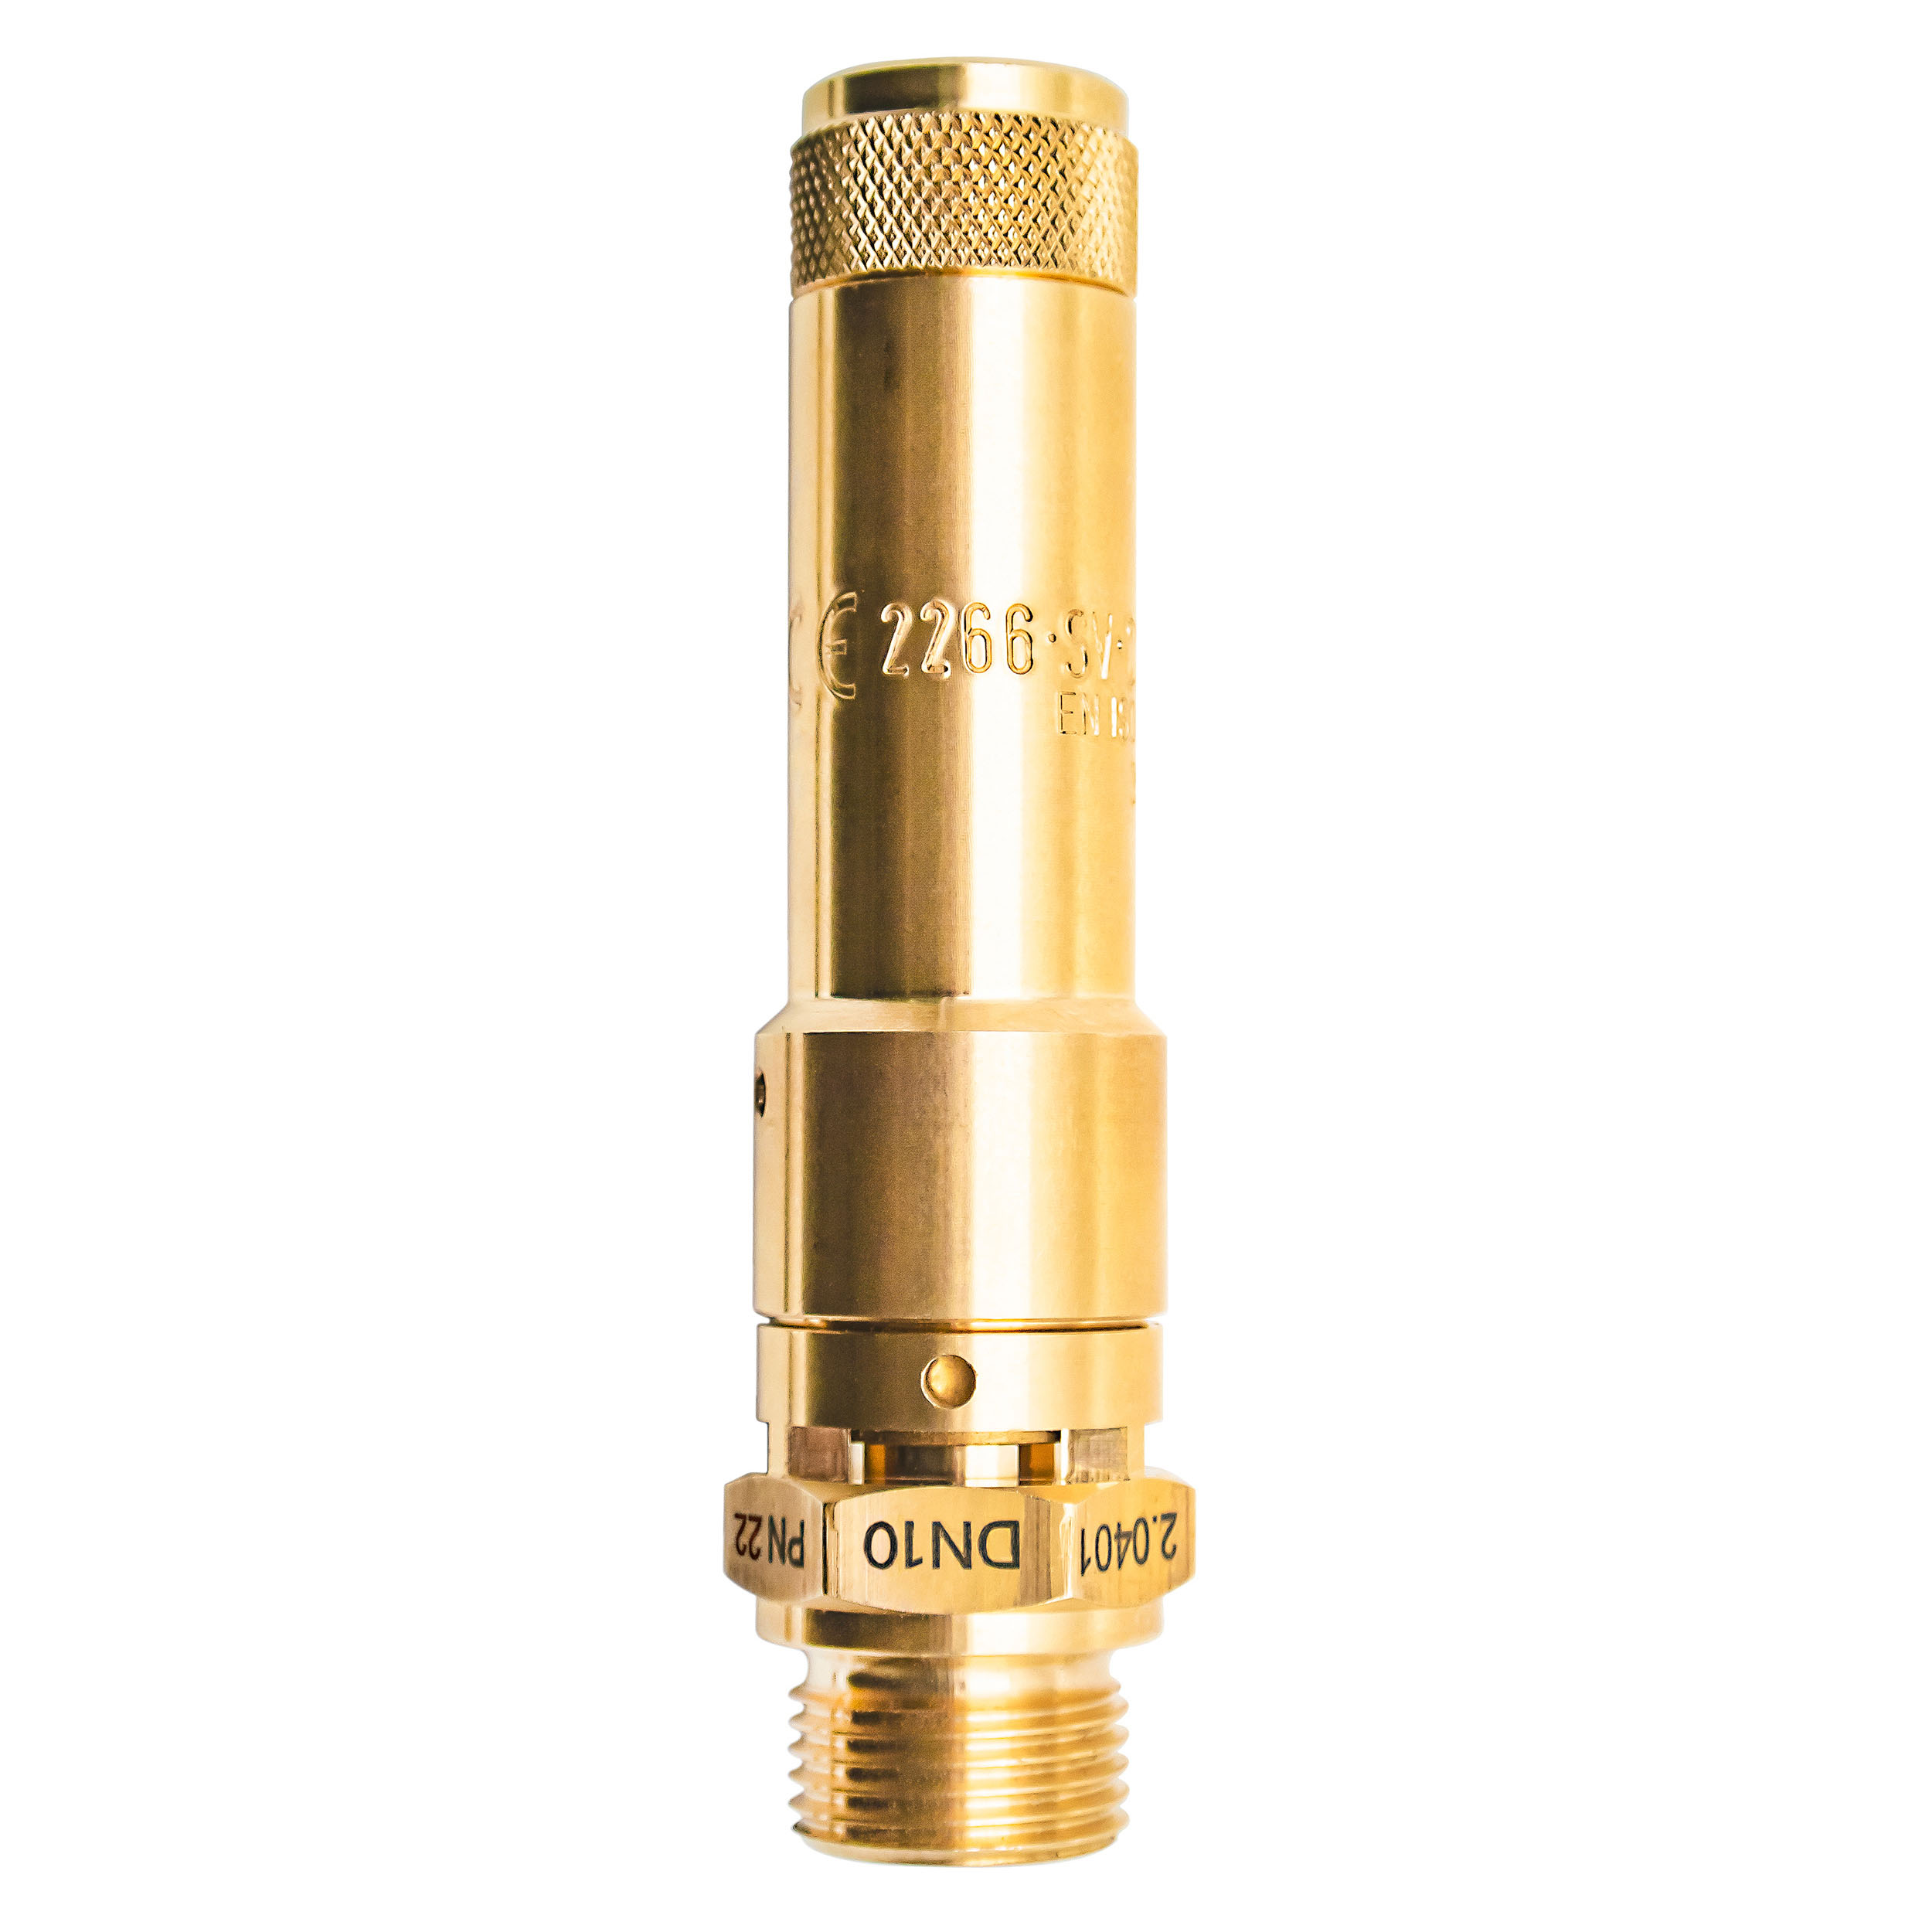 Savety valve component tested DN 10, G¾, set pressure: 2.0 bar (29 psi)